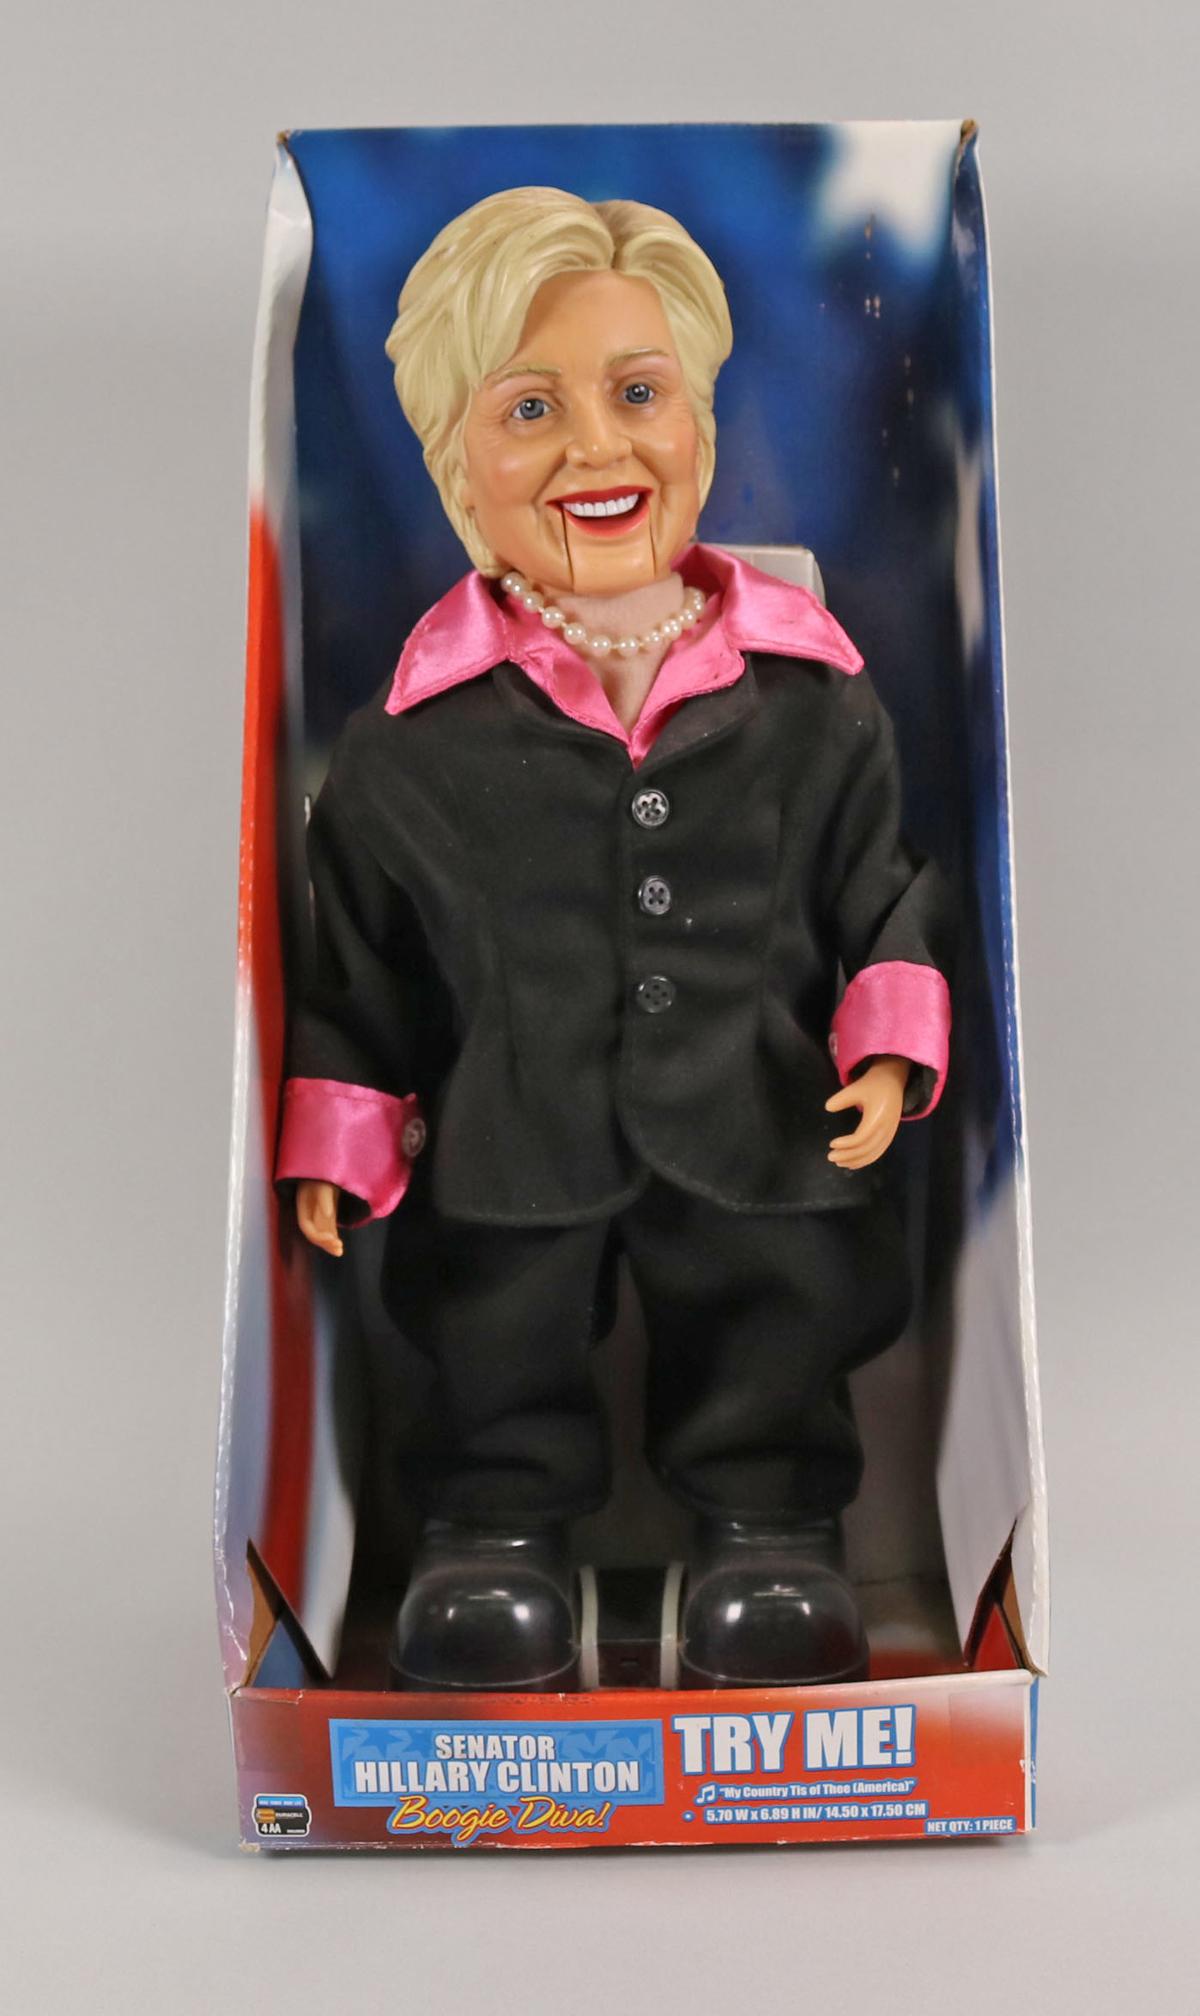 Senator Hillary Clinton Doll